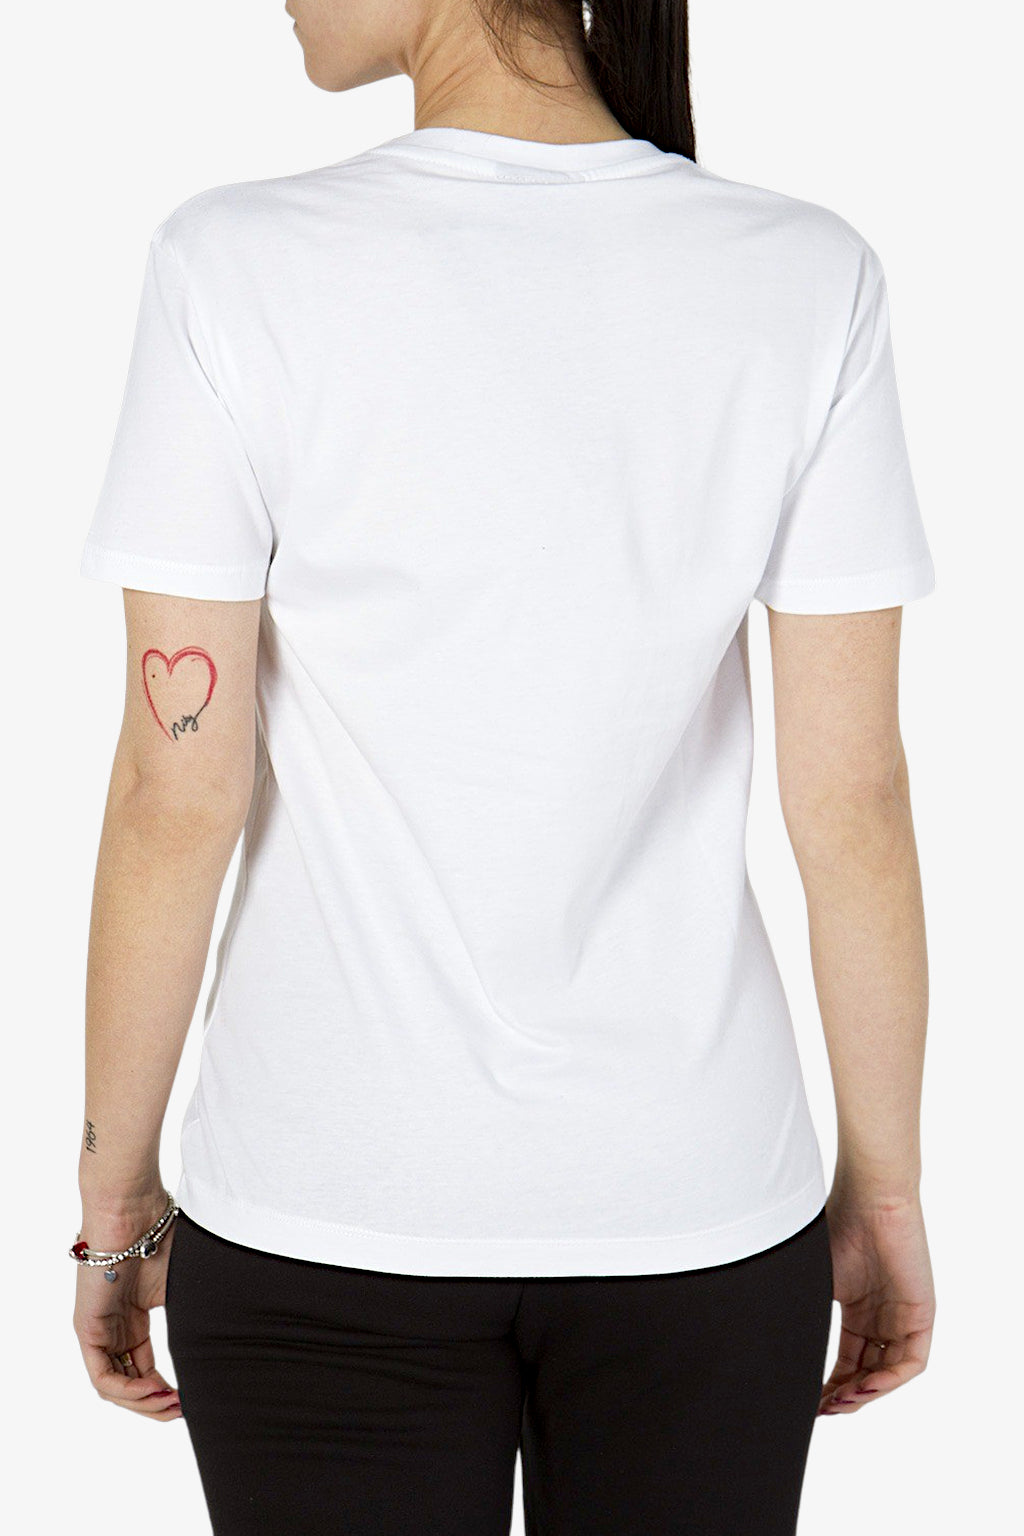 Pyrex T-shirt Maniche Corte Logo Orsetto Paillettes Bianco Donna